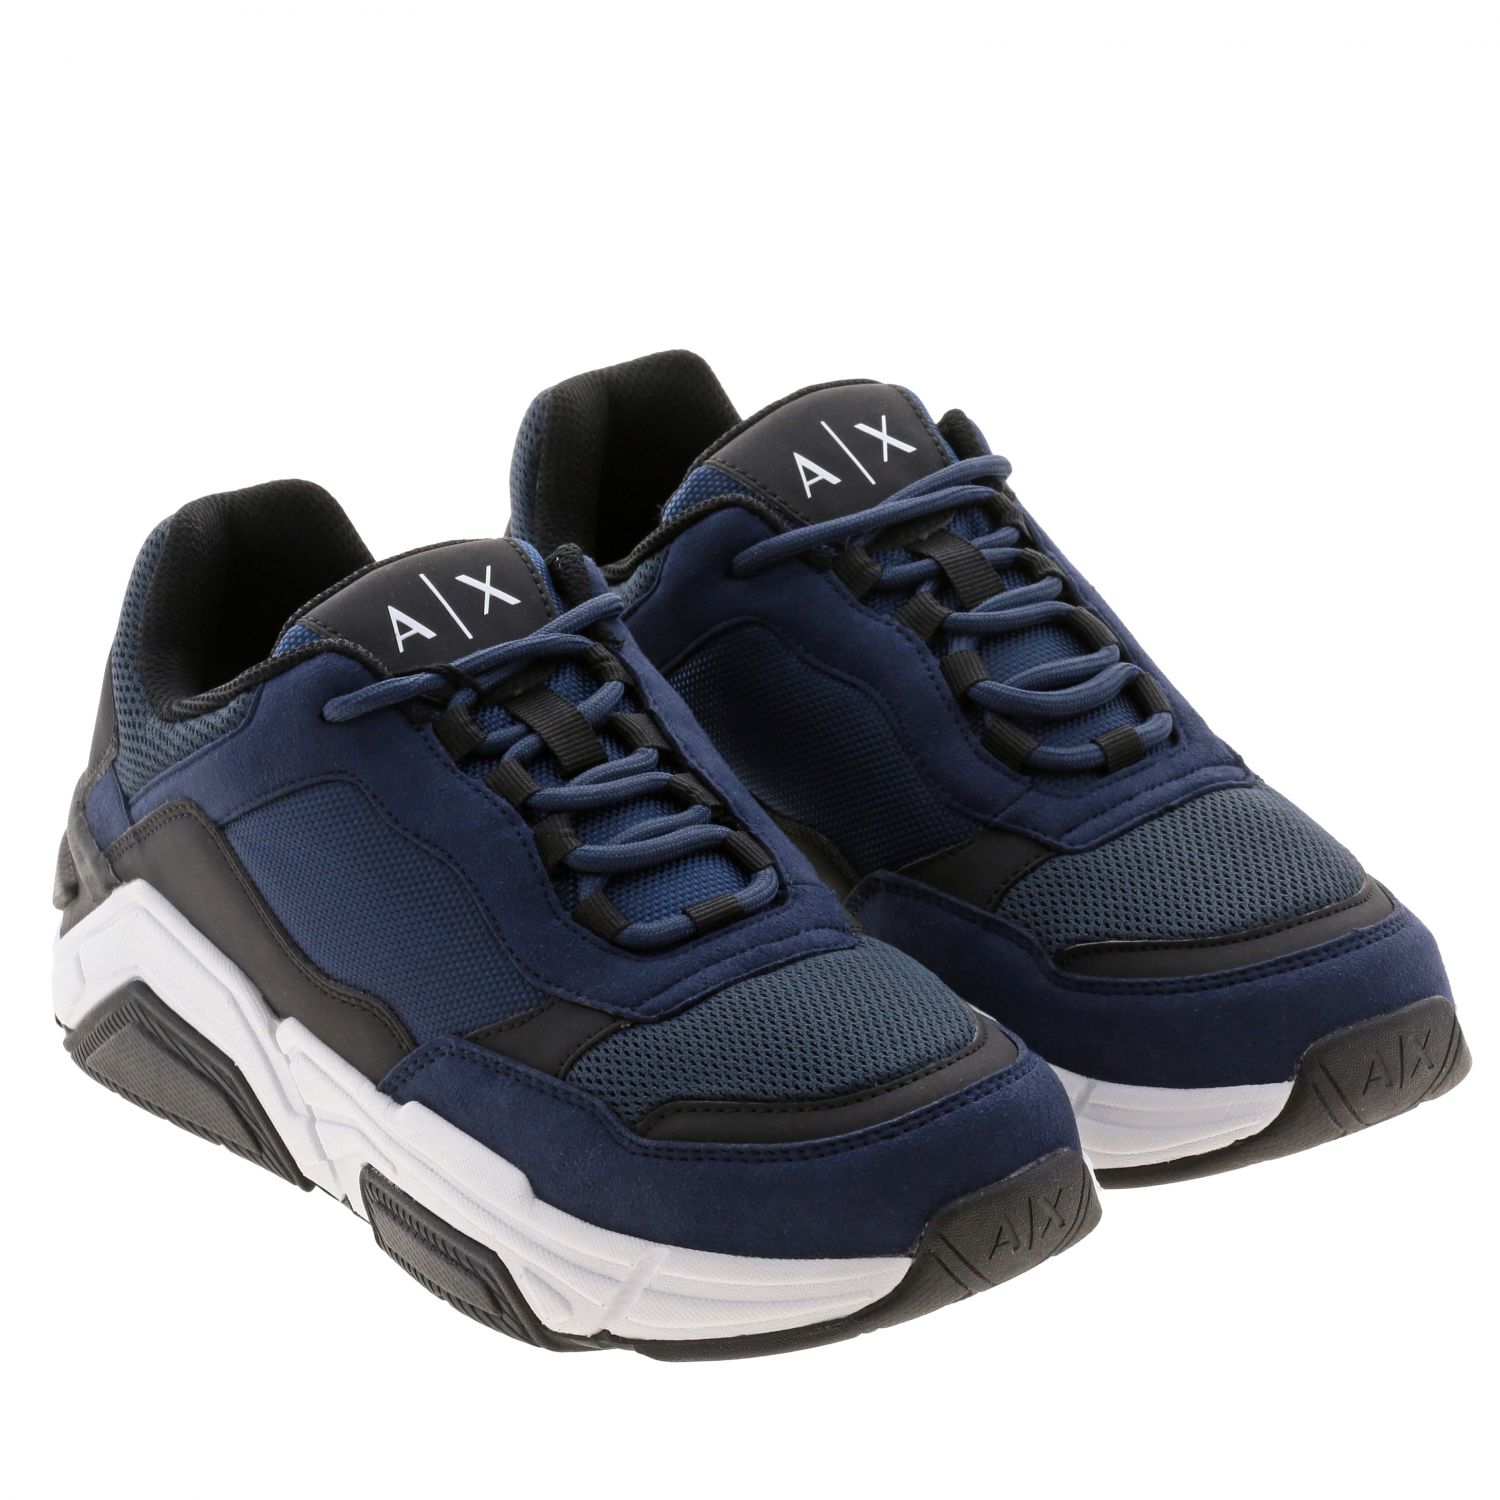 Armani Exchange Outlet: Sneakers men - Black 1 | Sneakers Armani ...